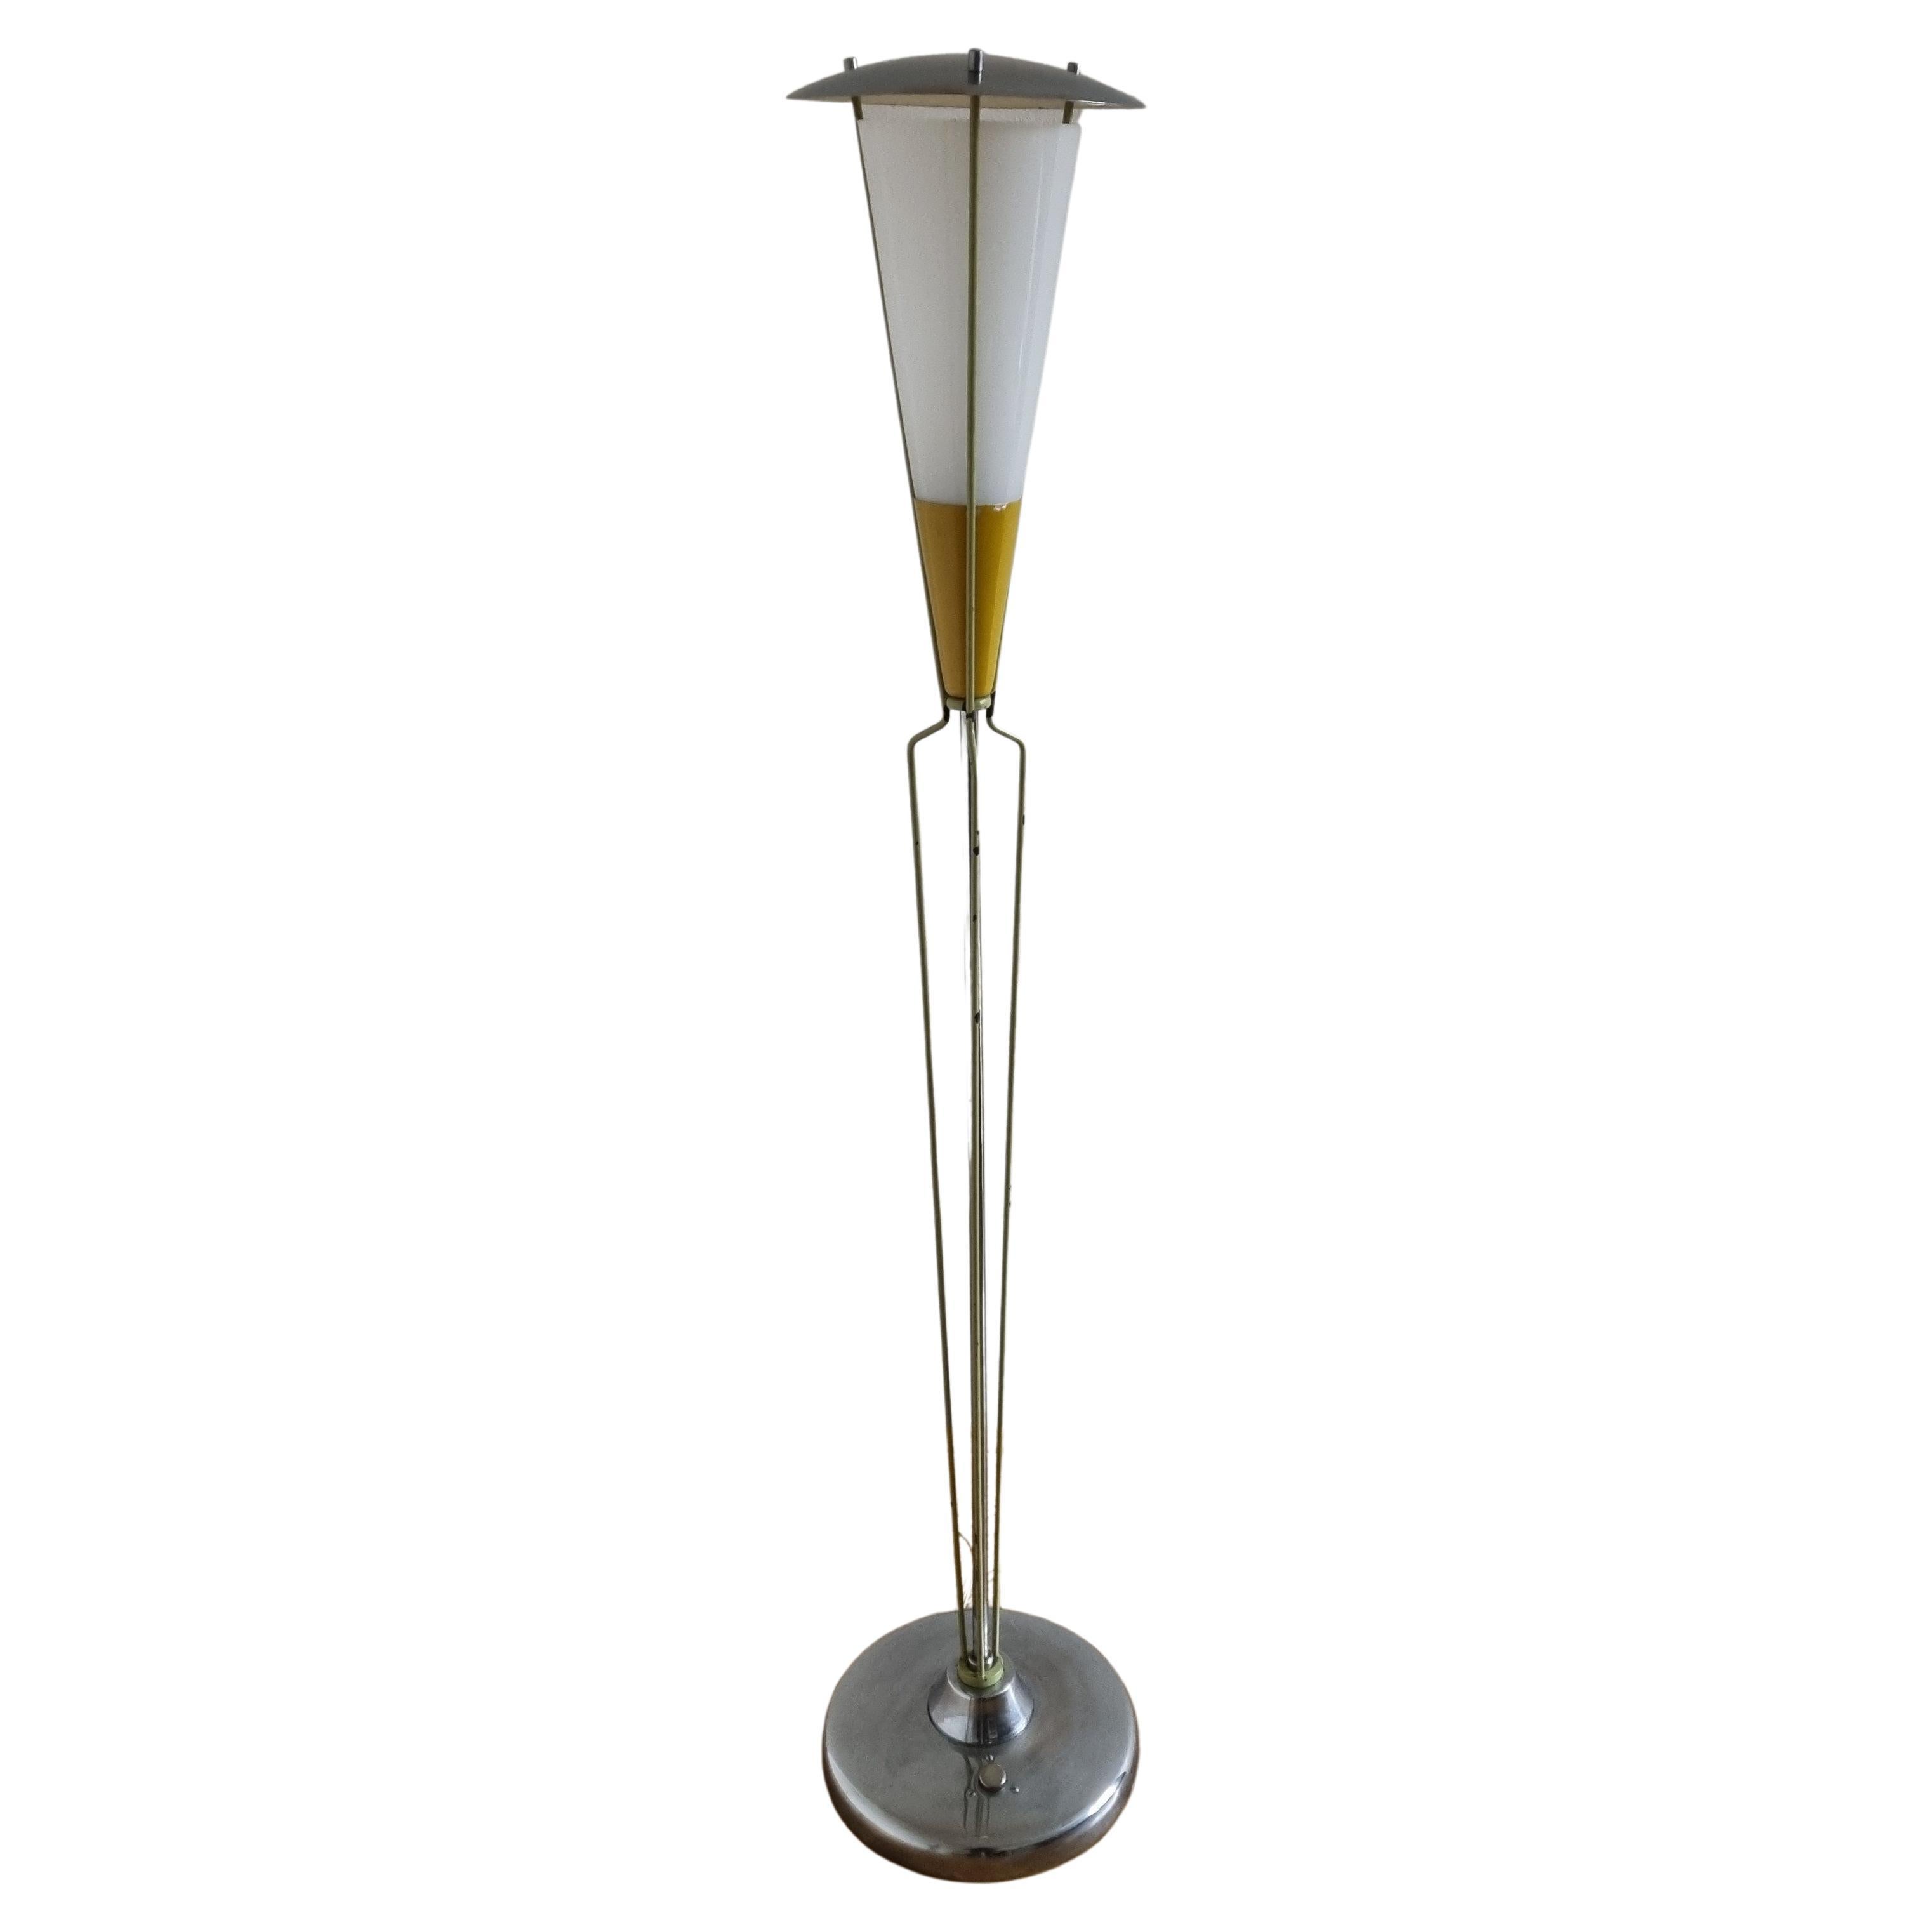 Rare Mid Century Floor Lamp in style of Stilnovo, 1960s